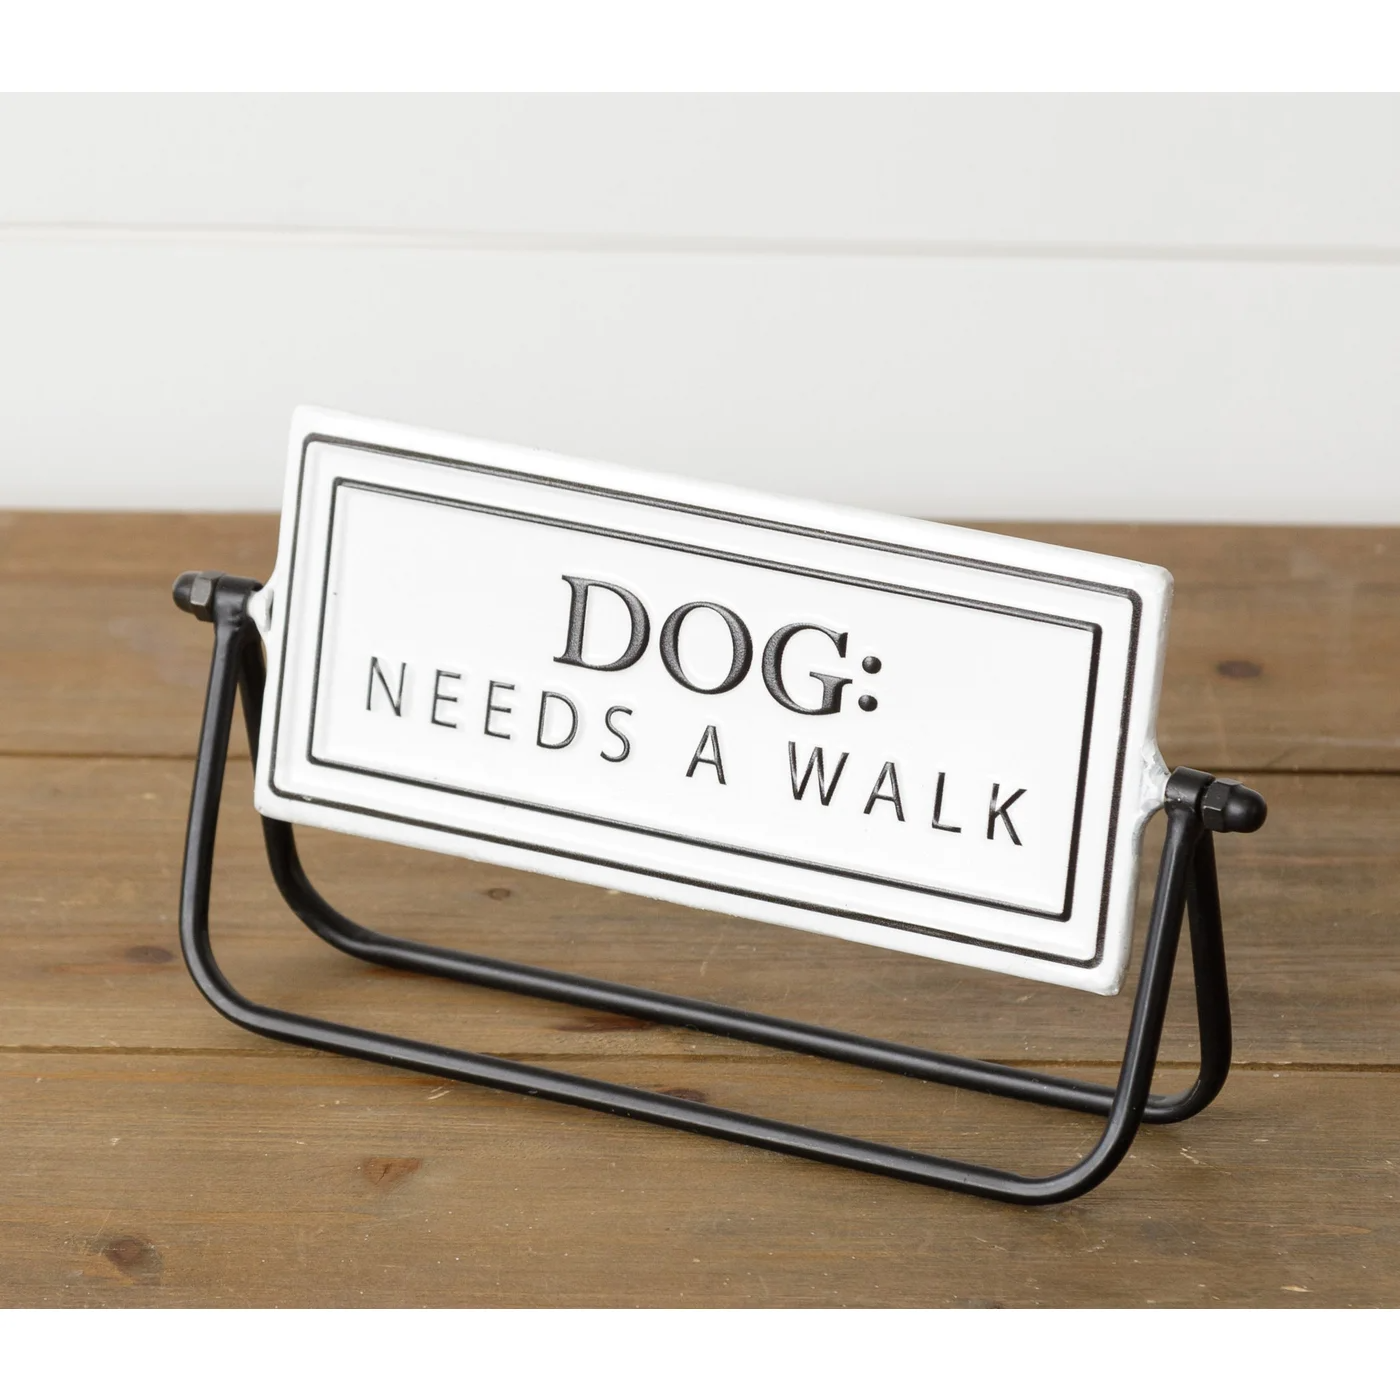 Dog Walked - Dog Needs A Walk Flip Sign